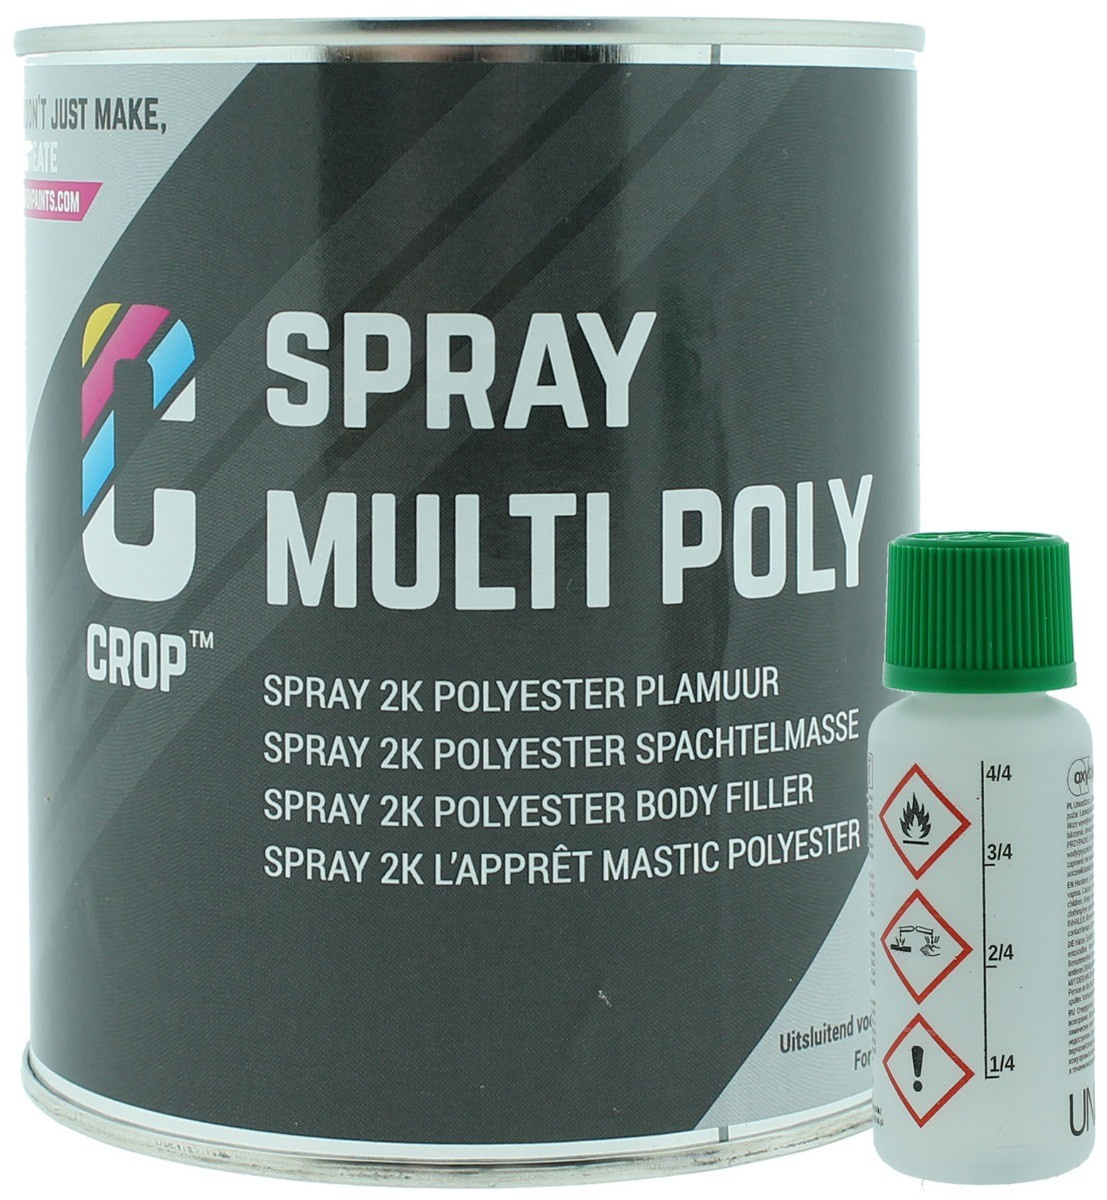 Fast Drying Water-Based Poly Urethane Aerosol Spray